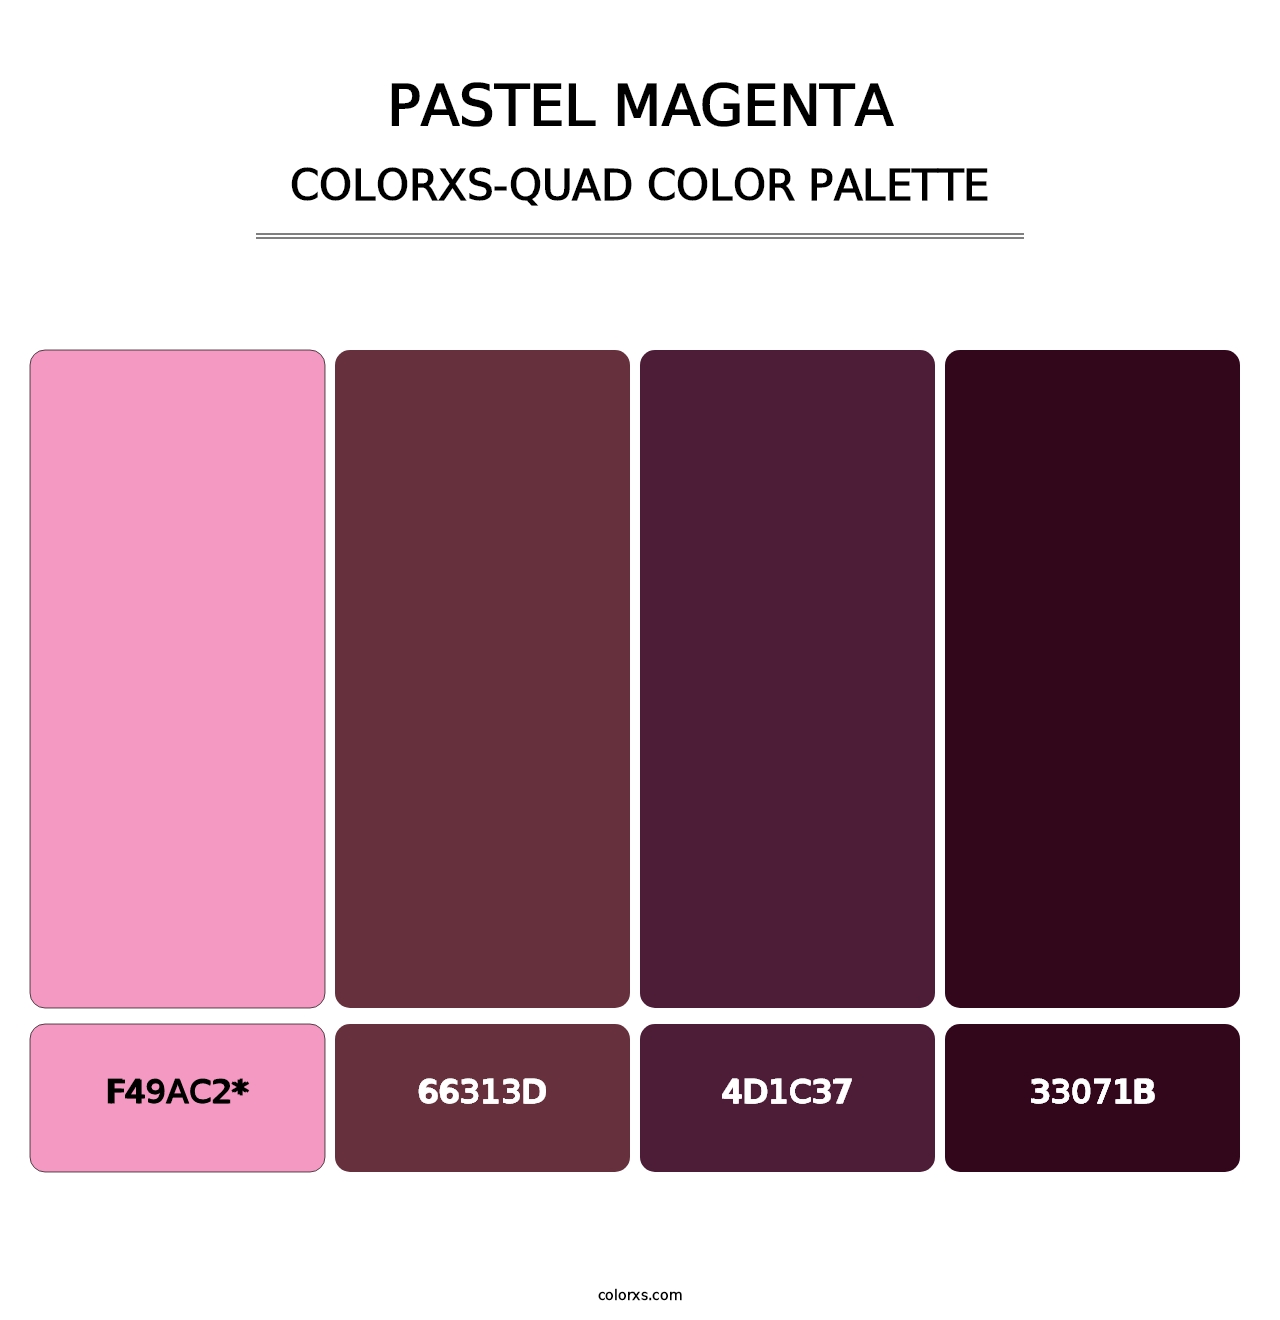 Pastel Magenta - Colorxs Quad Palette